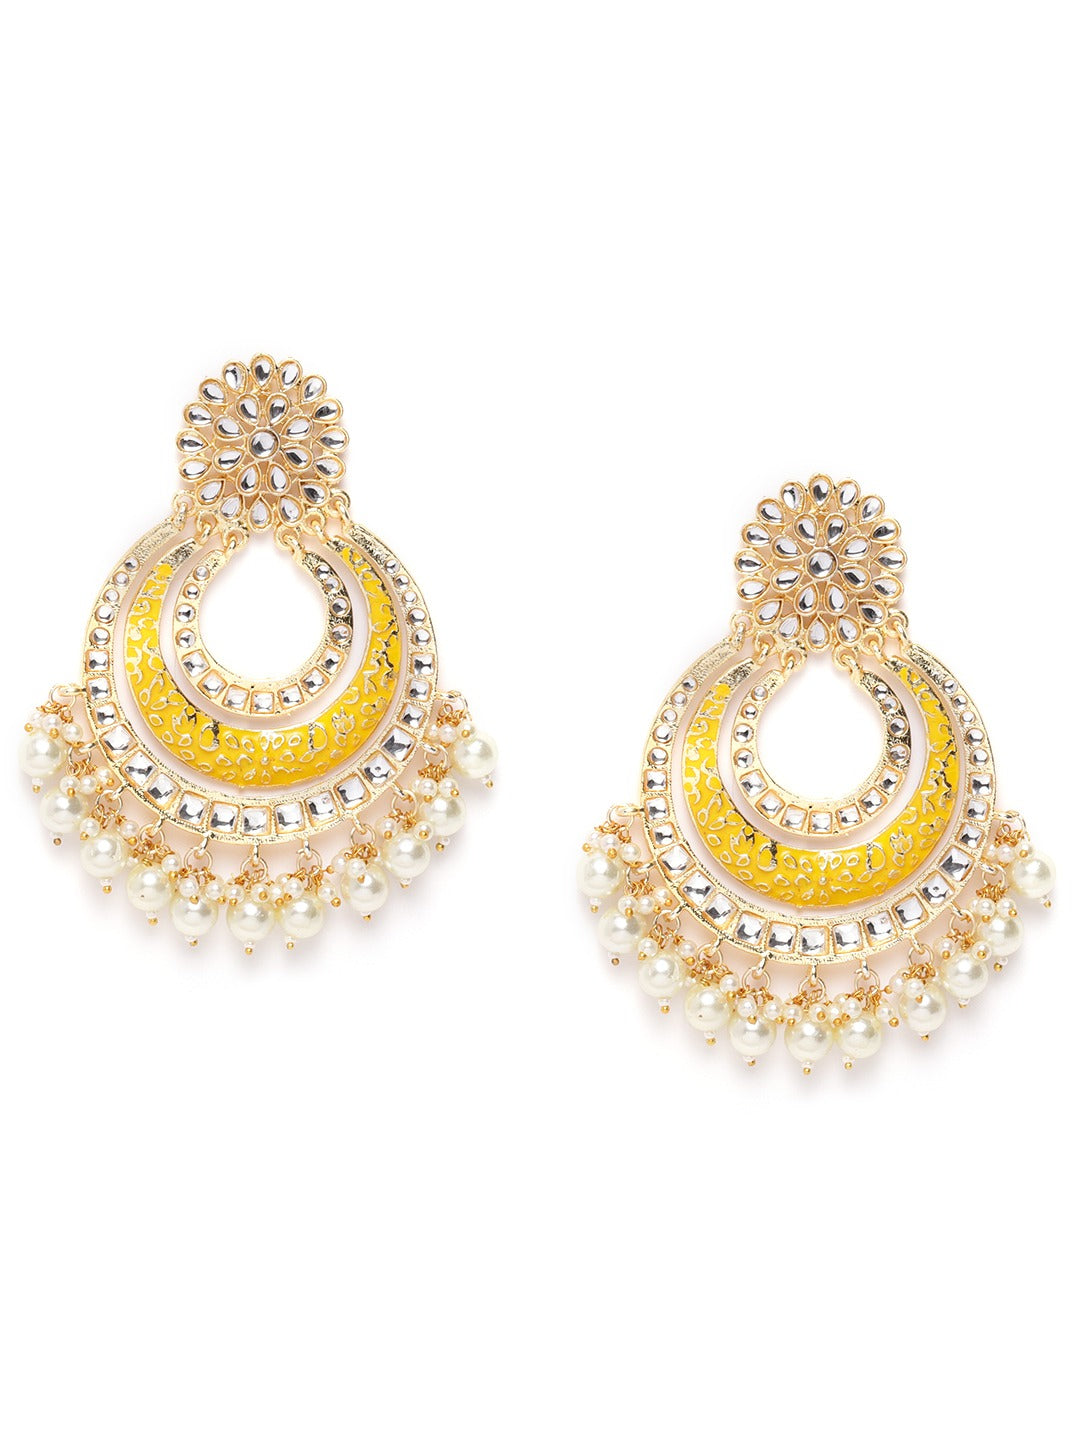 Bollywood Indian Women Wedding Gold Hoop Earrings | Hoop Earrings | Drop...  | Gold earrings with price, Gold bridal earrings, Gold earrings indian